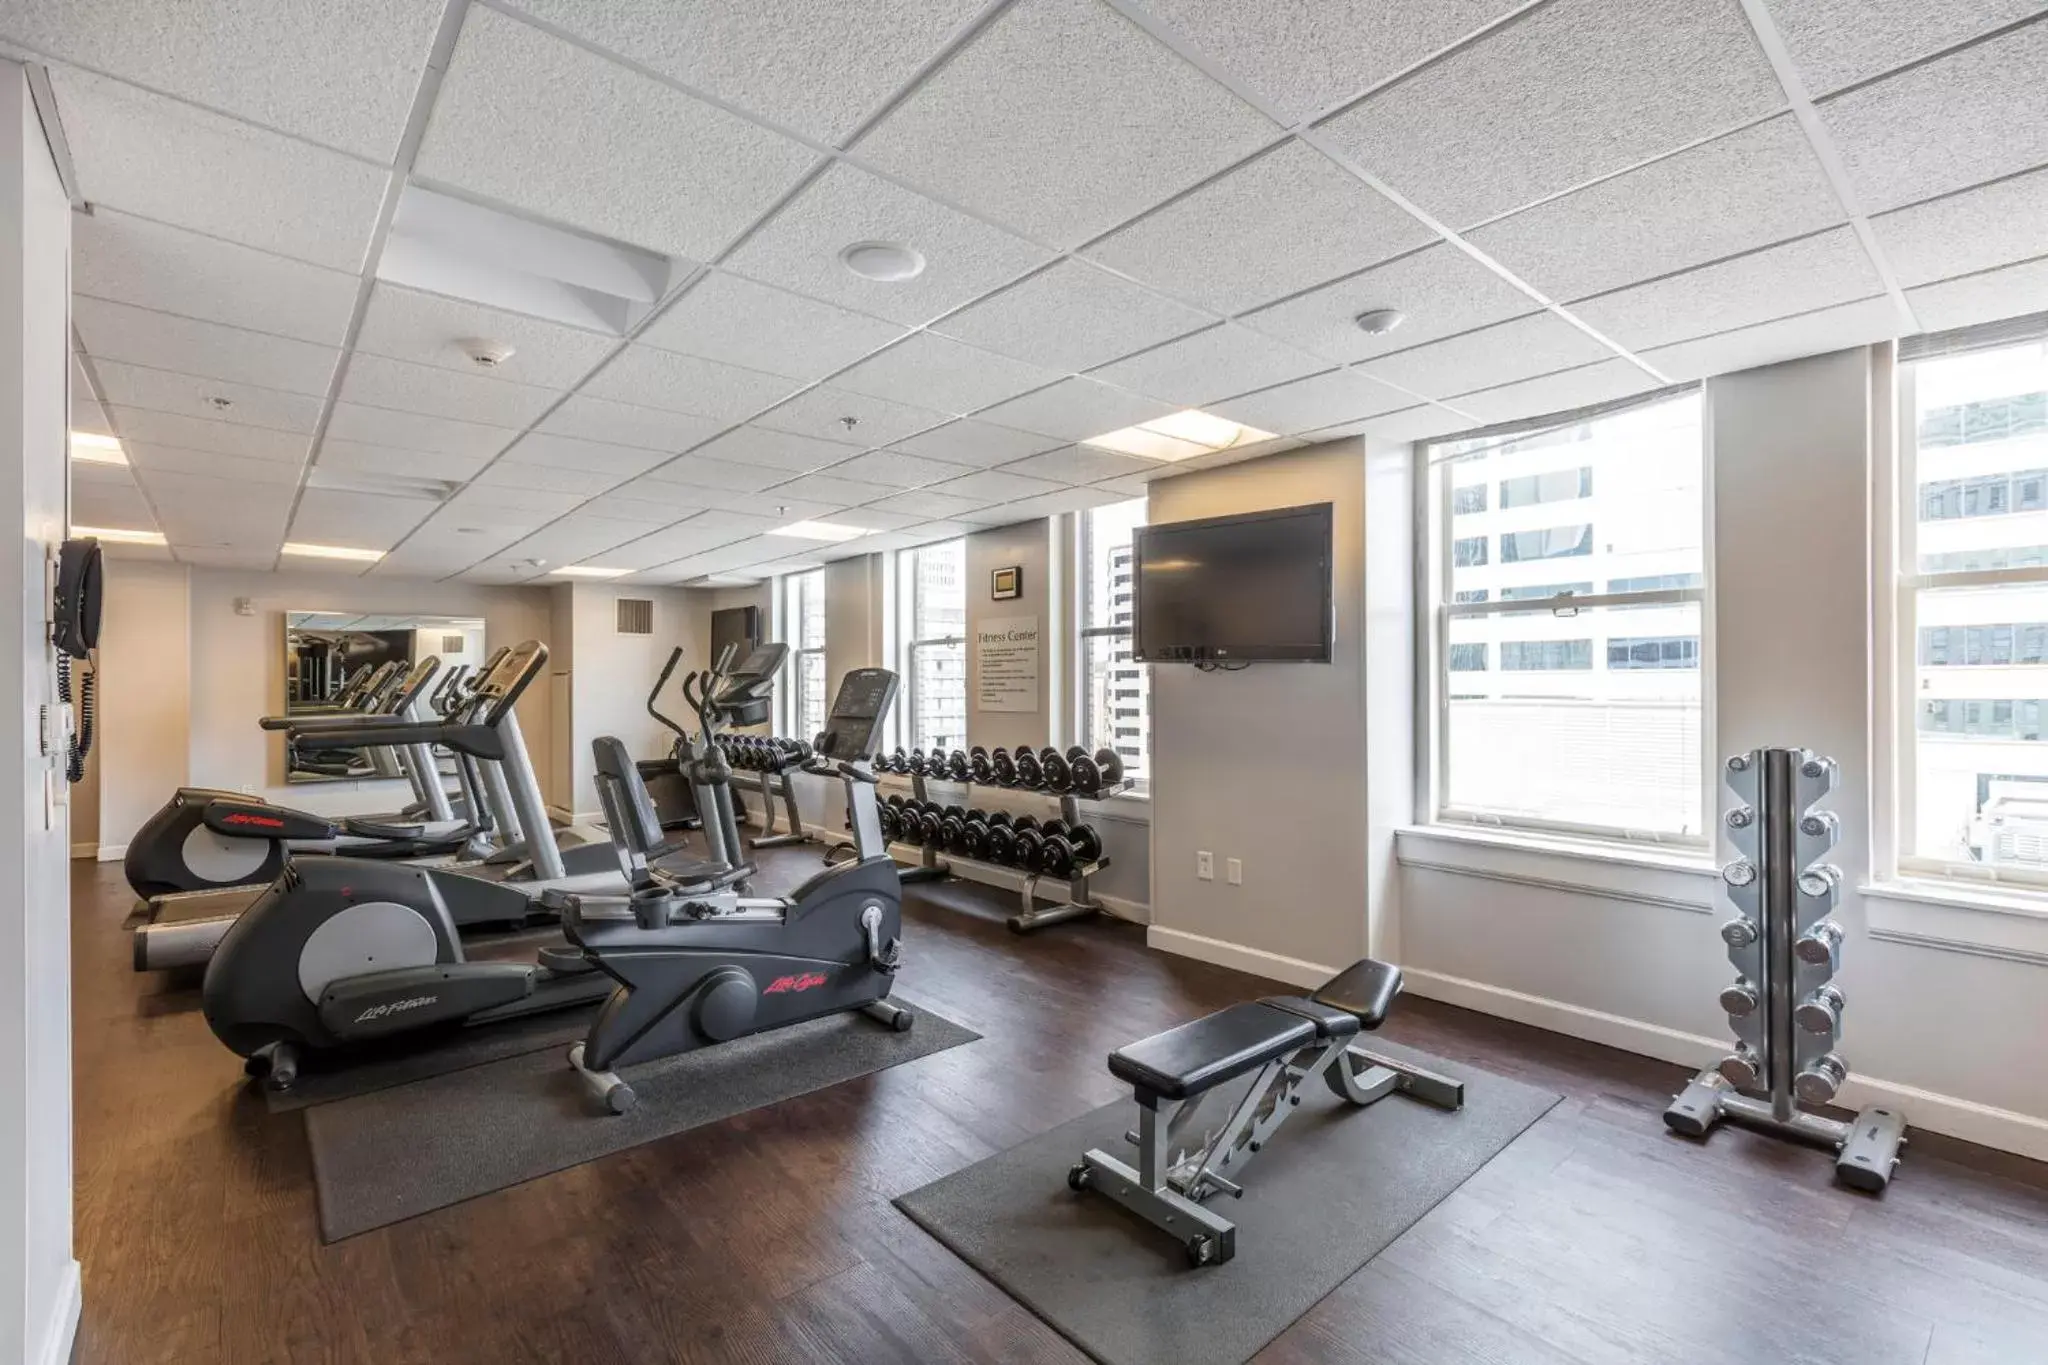 Fitness centre/facilities, Fitness Center/Facilities in Hotel Indigo Nashville - The Countrypolitan